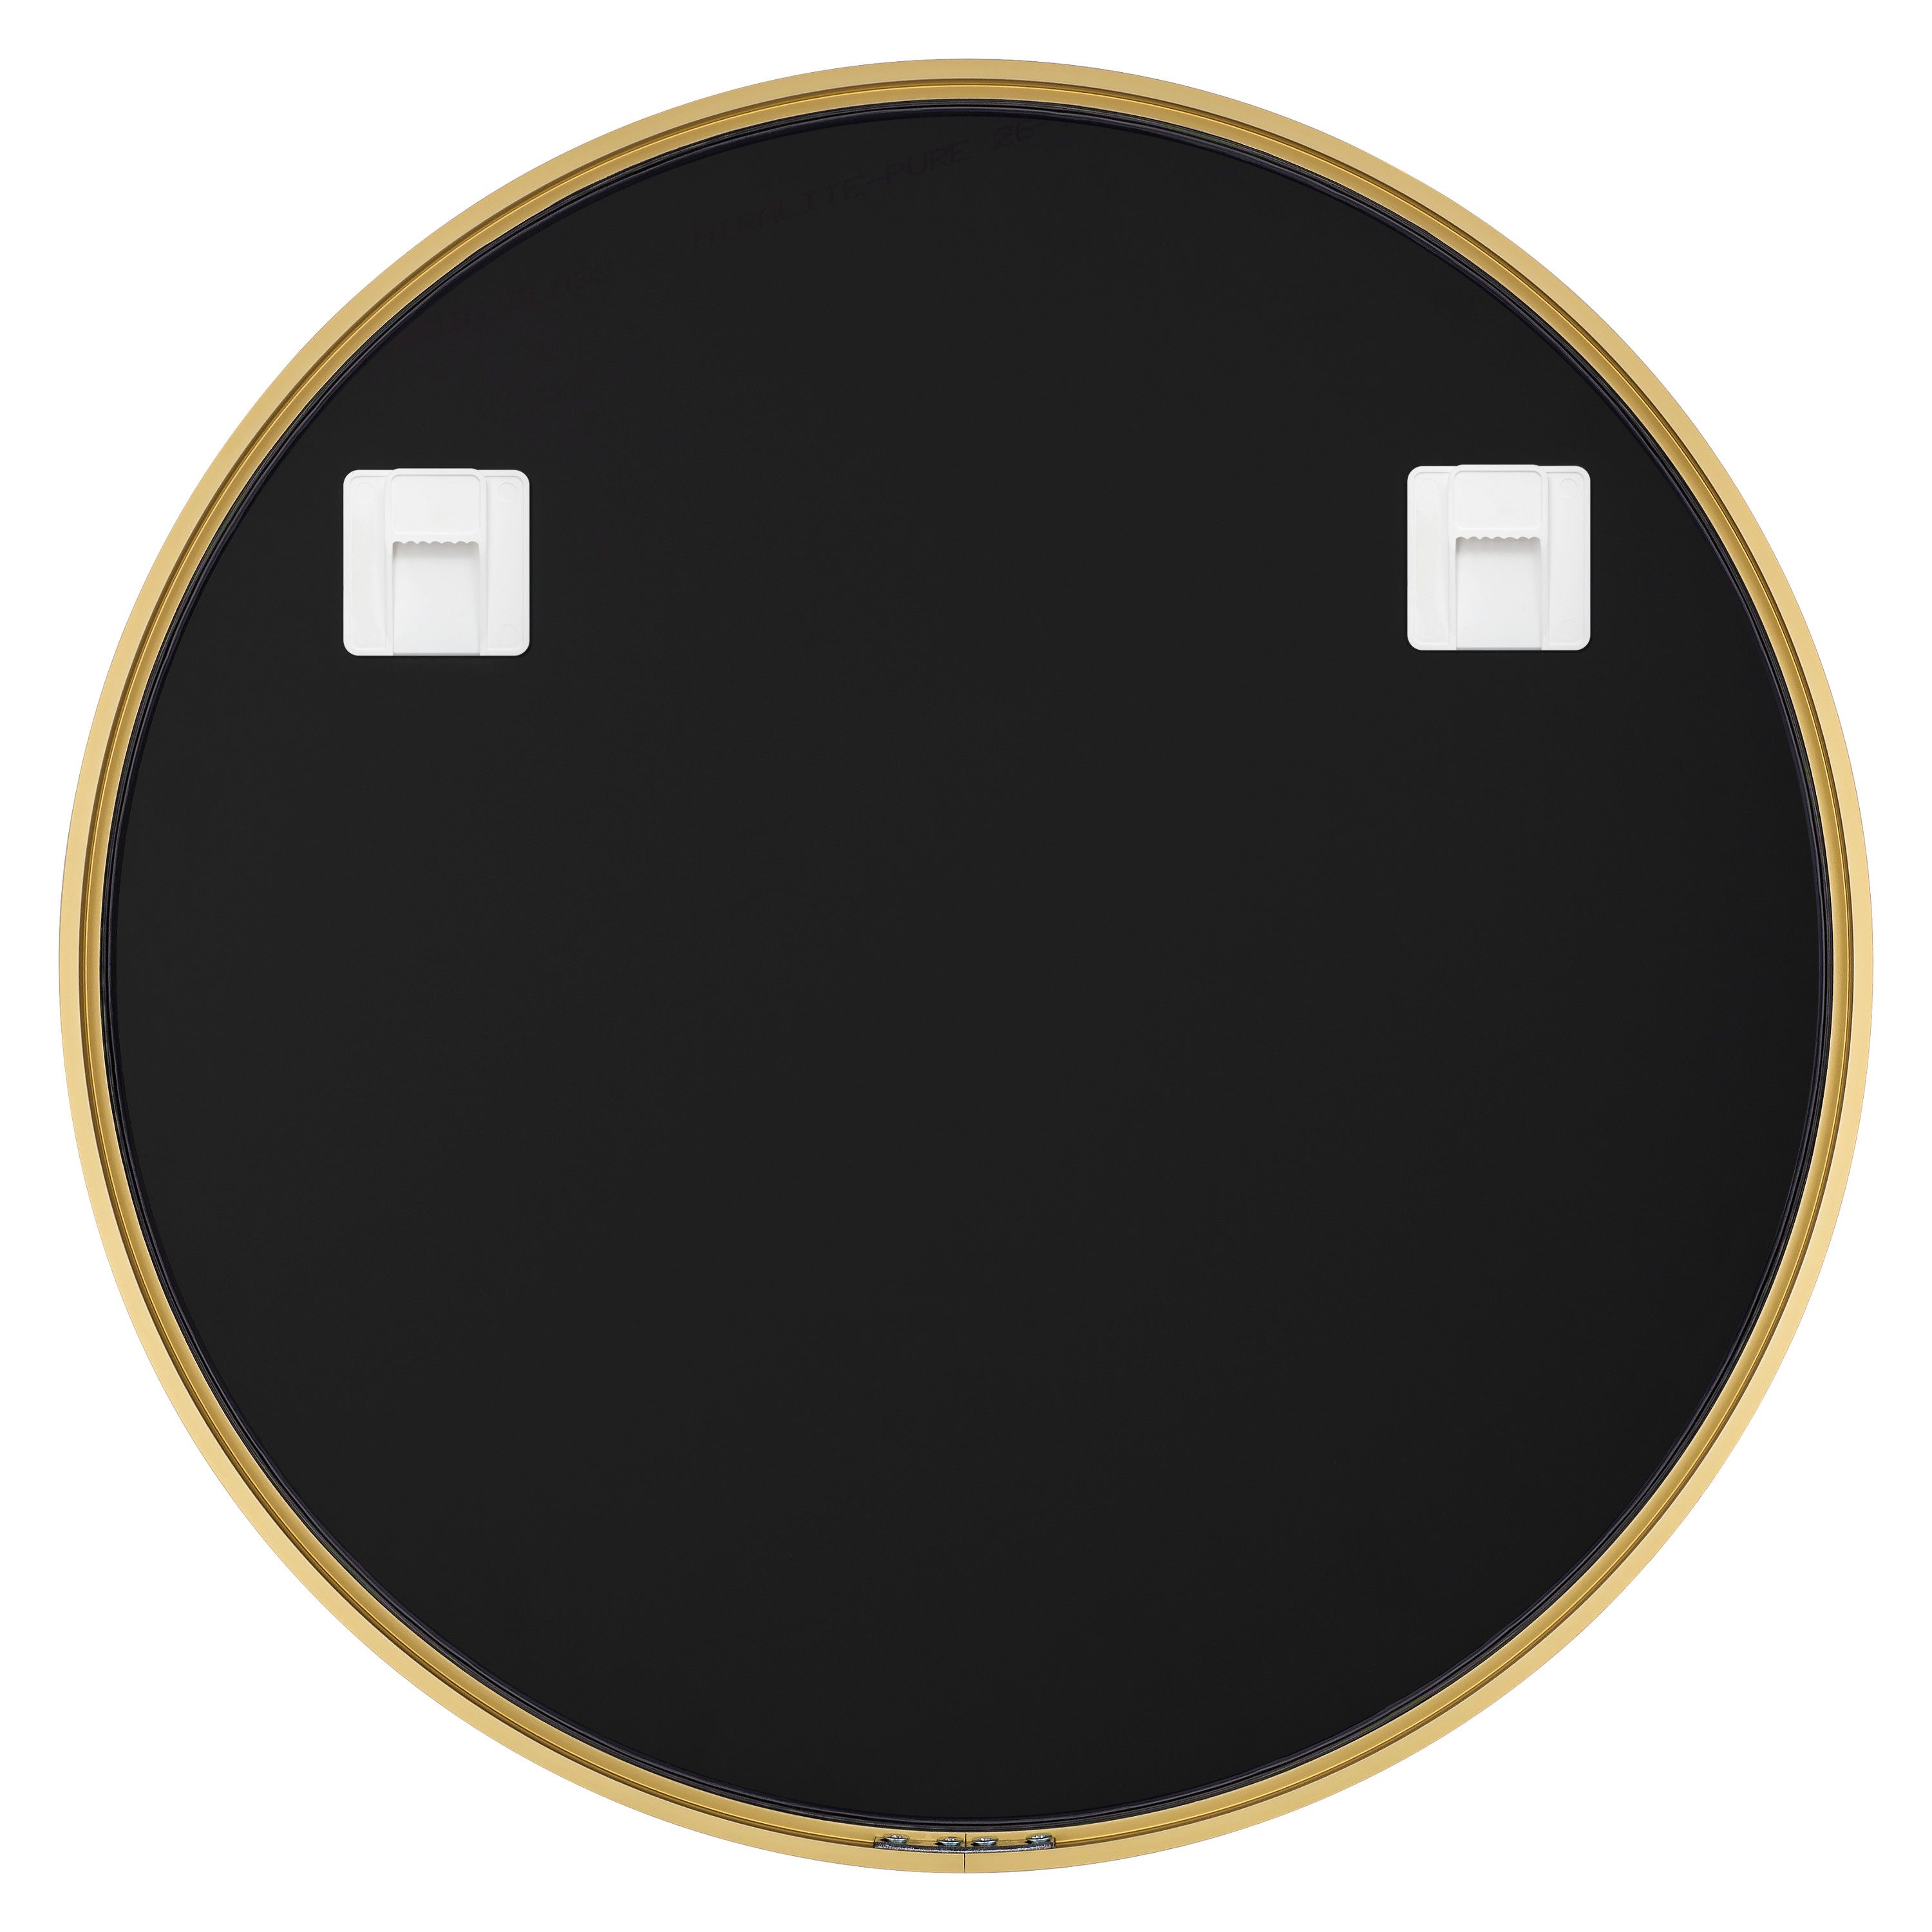 GoodHome Tisa Gold effect Round Wall-mounted Bathroom Mirror (H)60cm (W)60cm